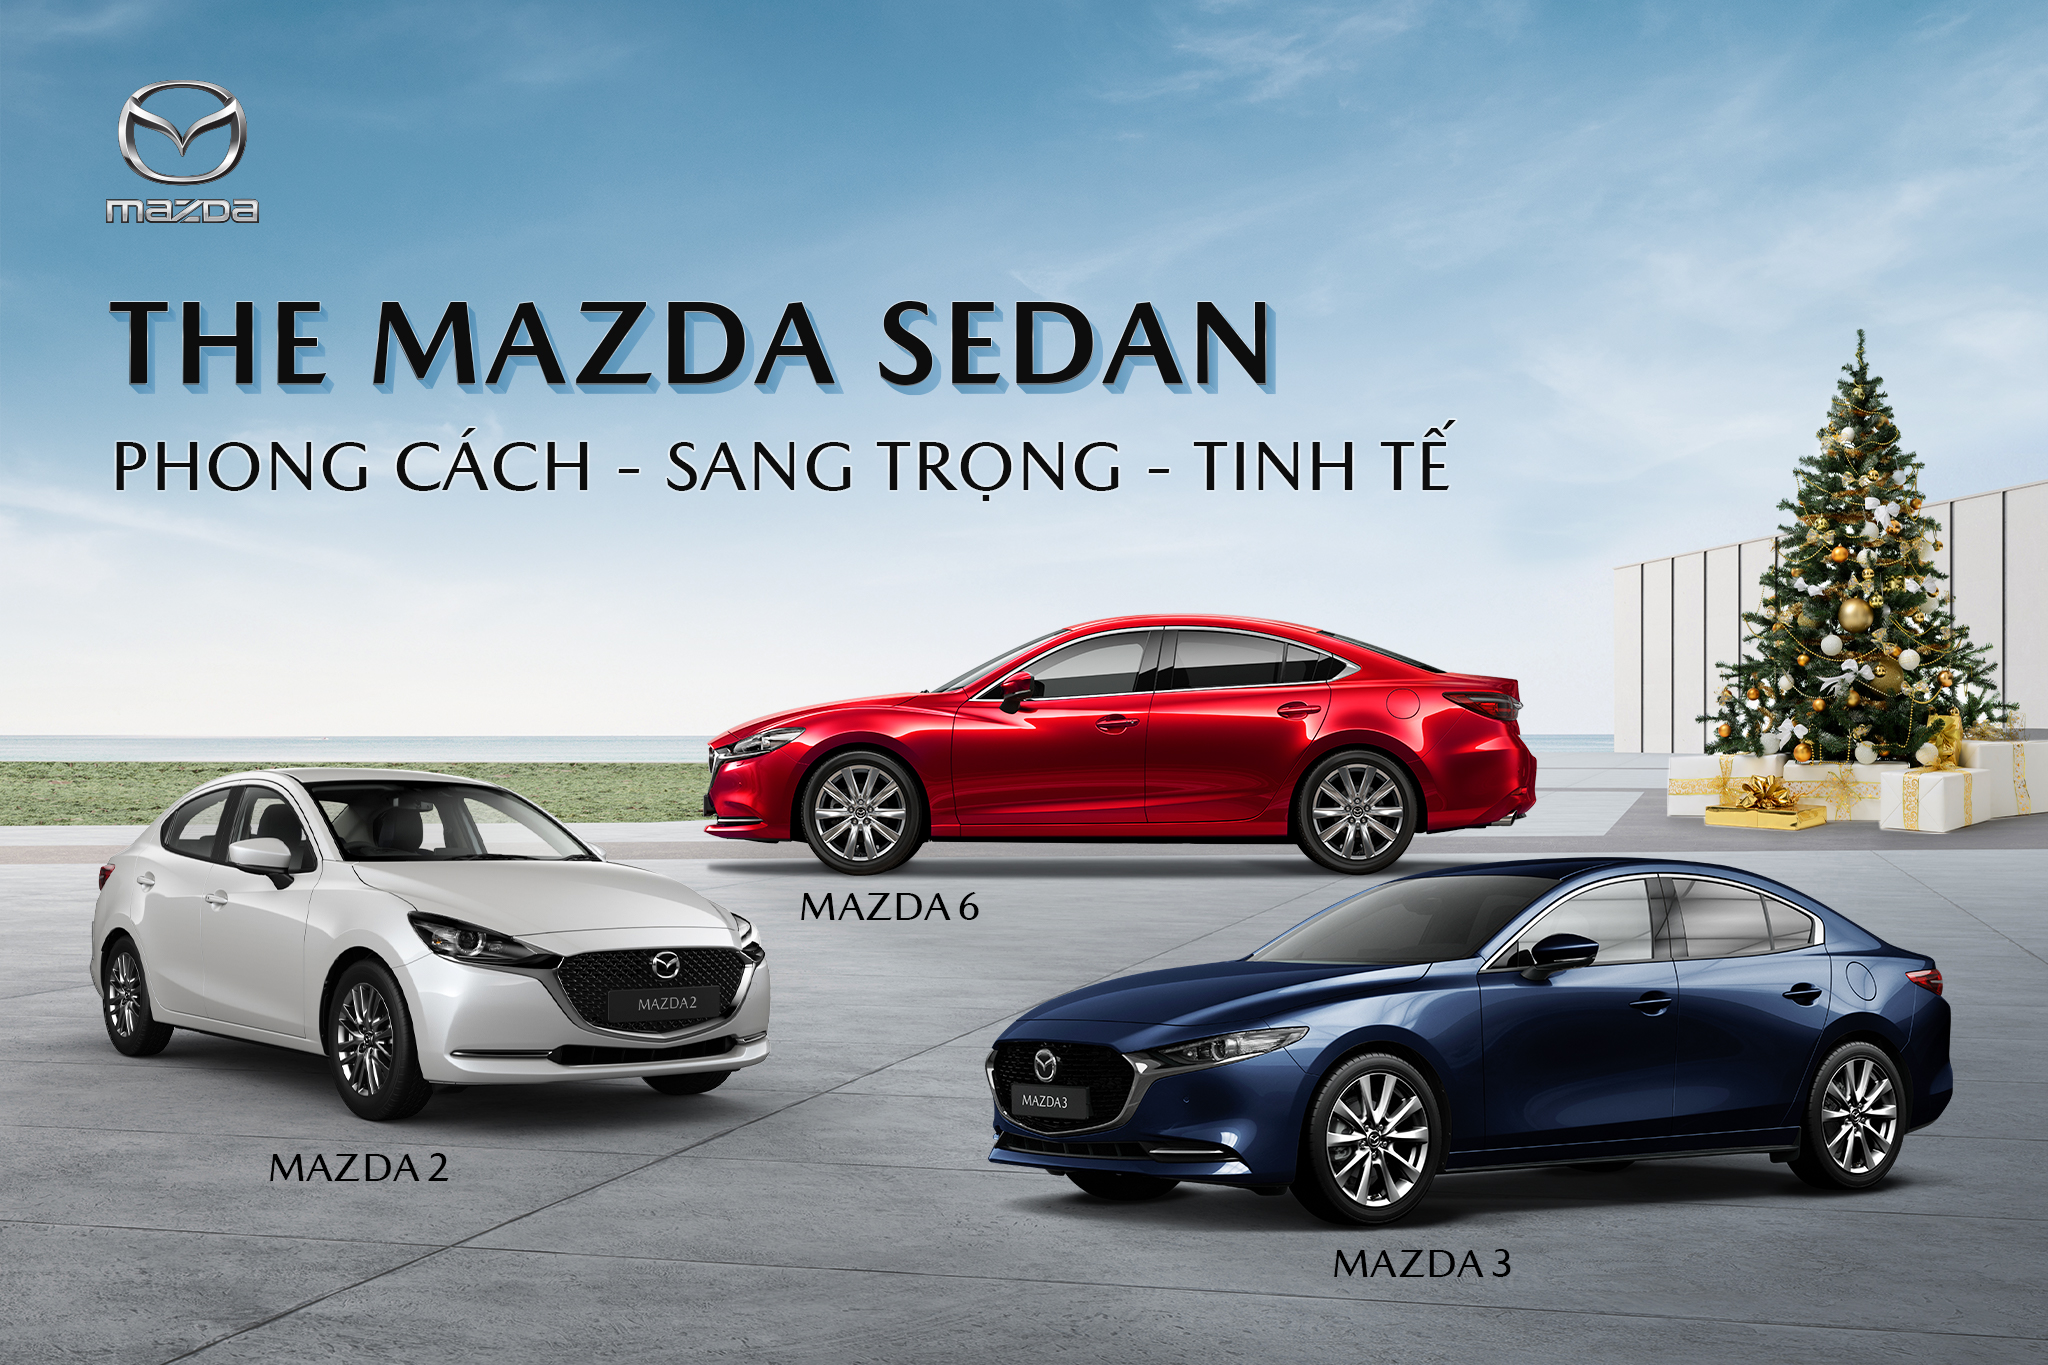 Mẫu content quảng cáo cuối năm - Mazda